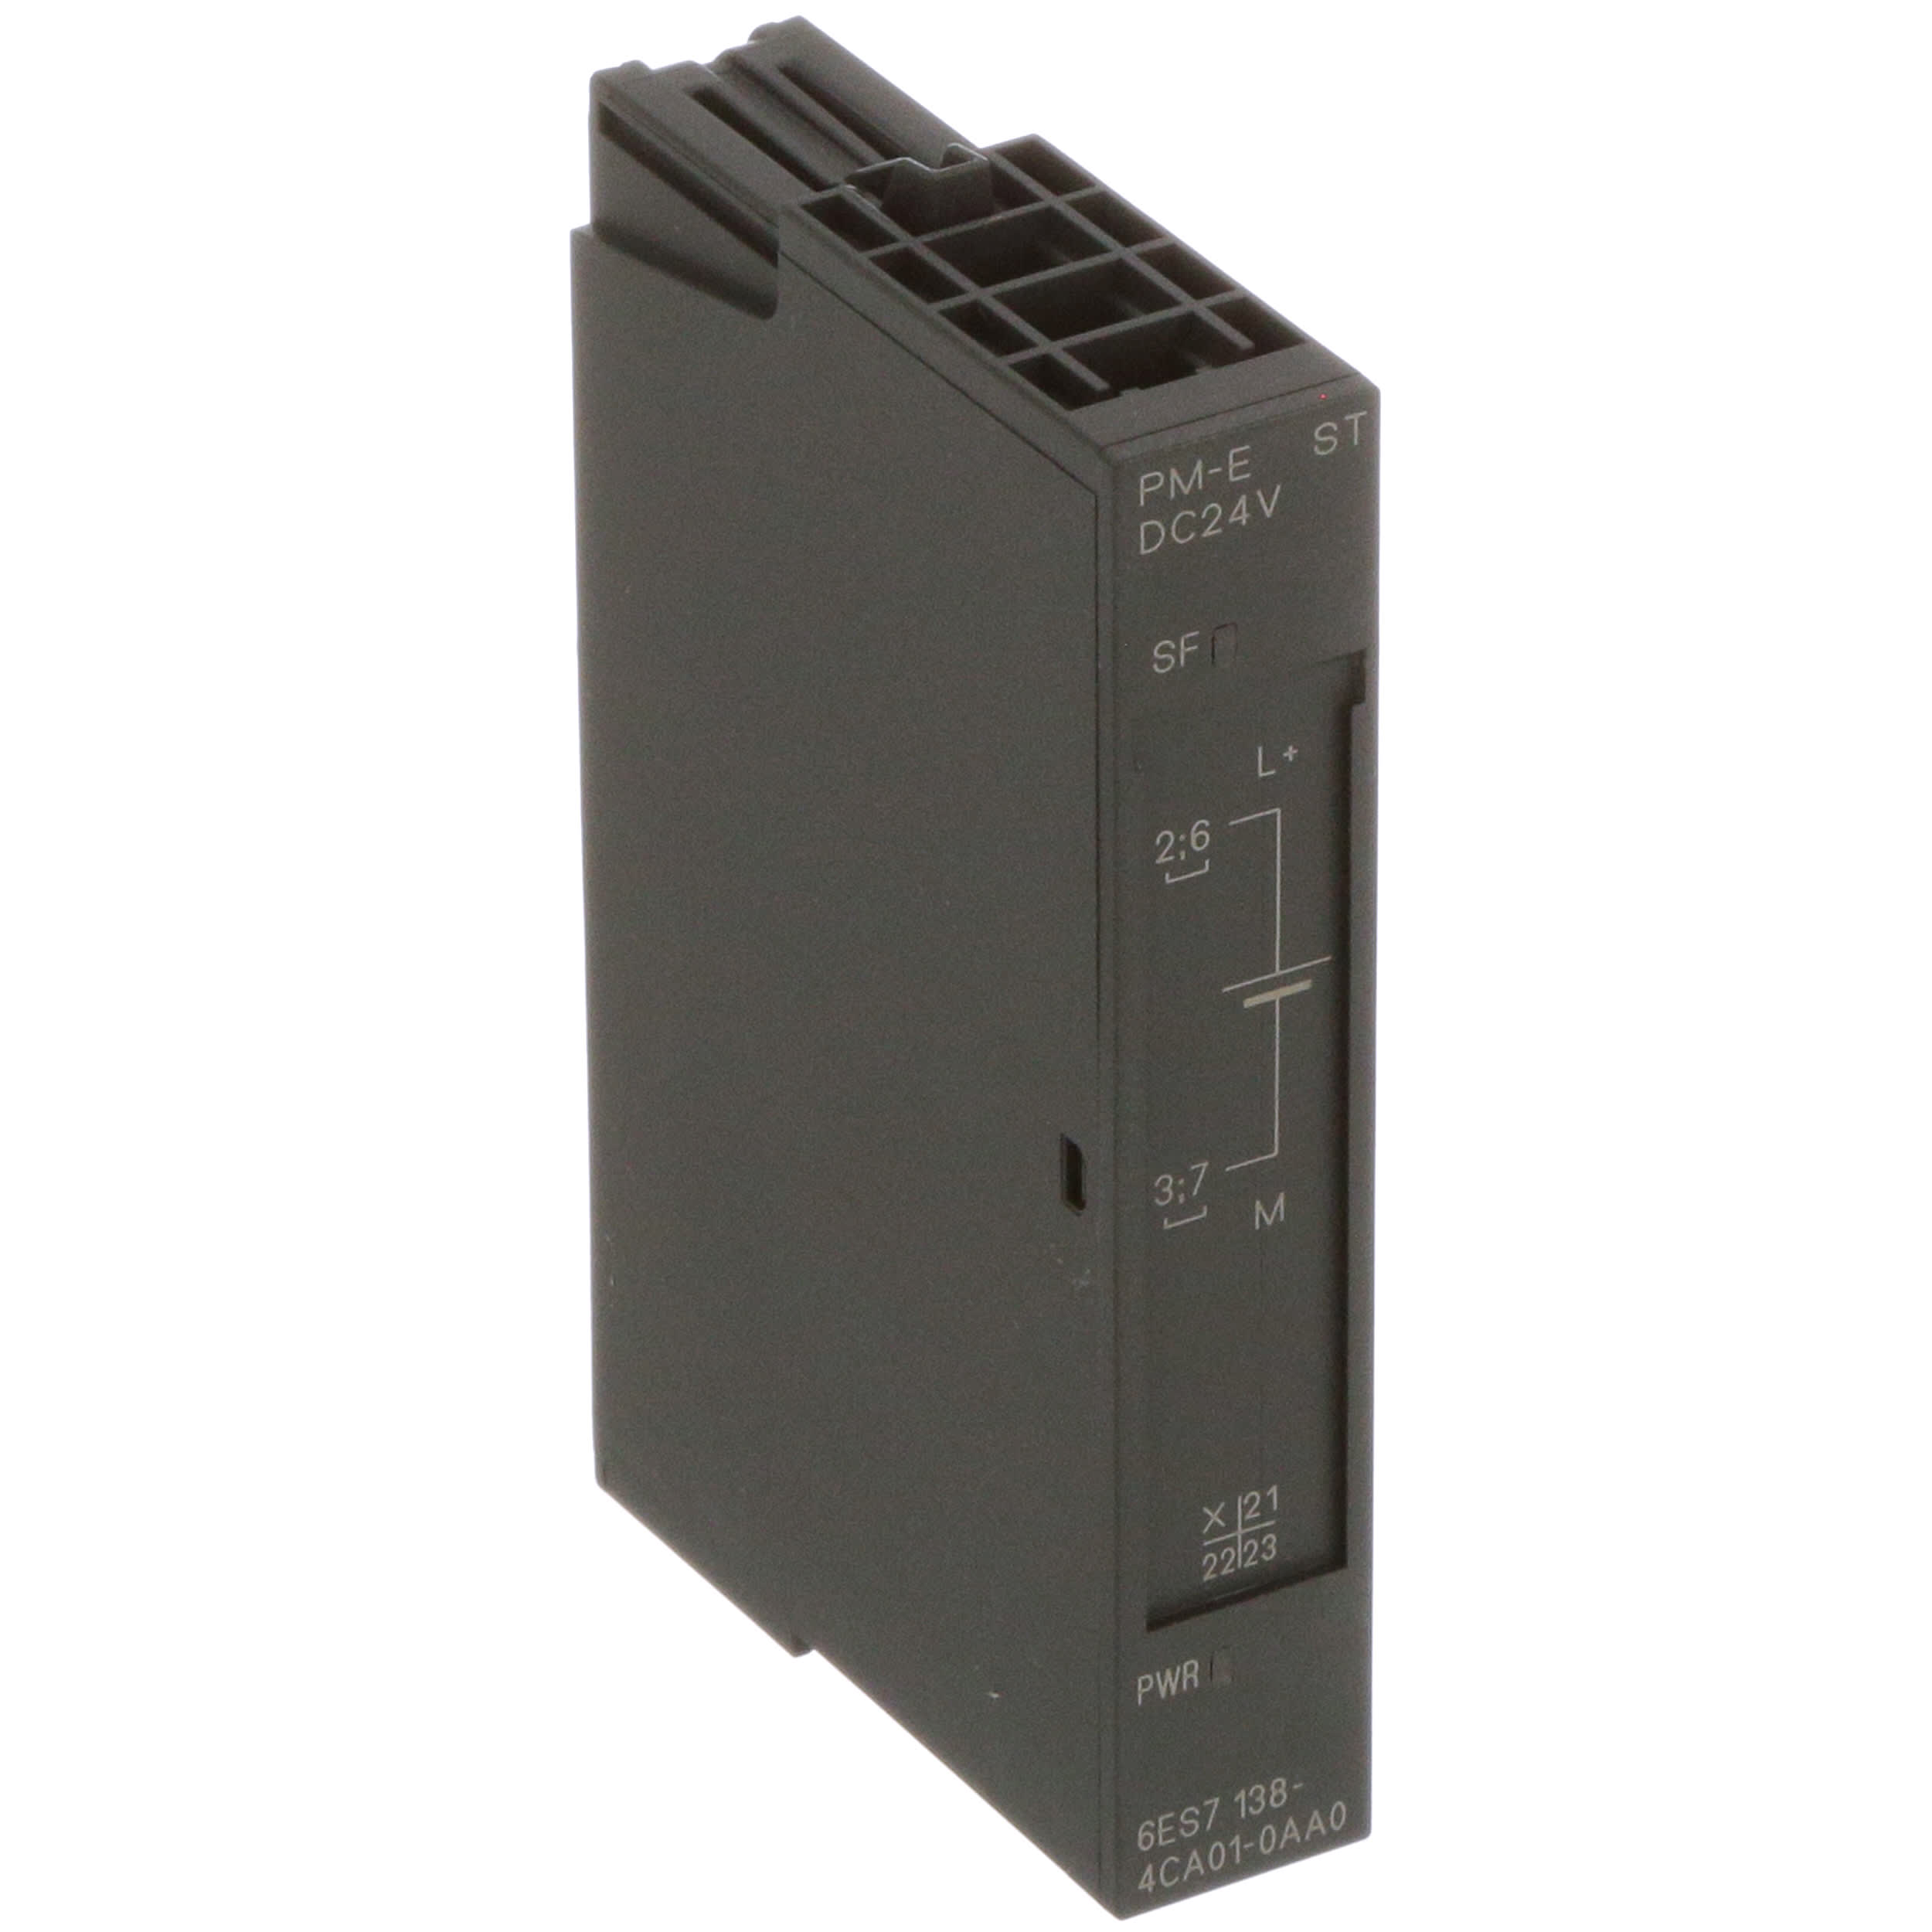 Siemens 6ES71384CA010AA0 Power Supply Module for sale online 